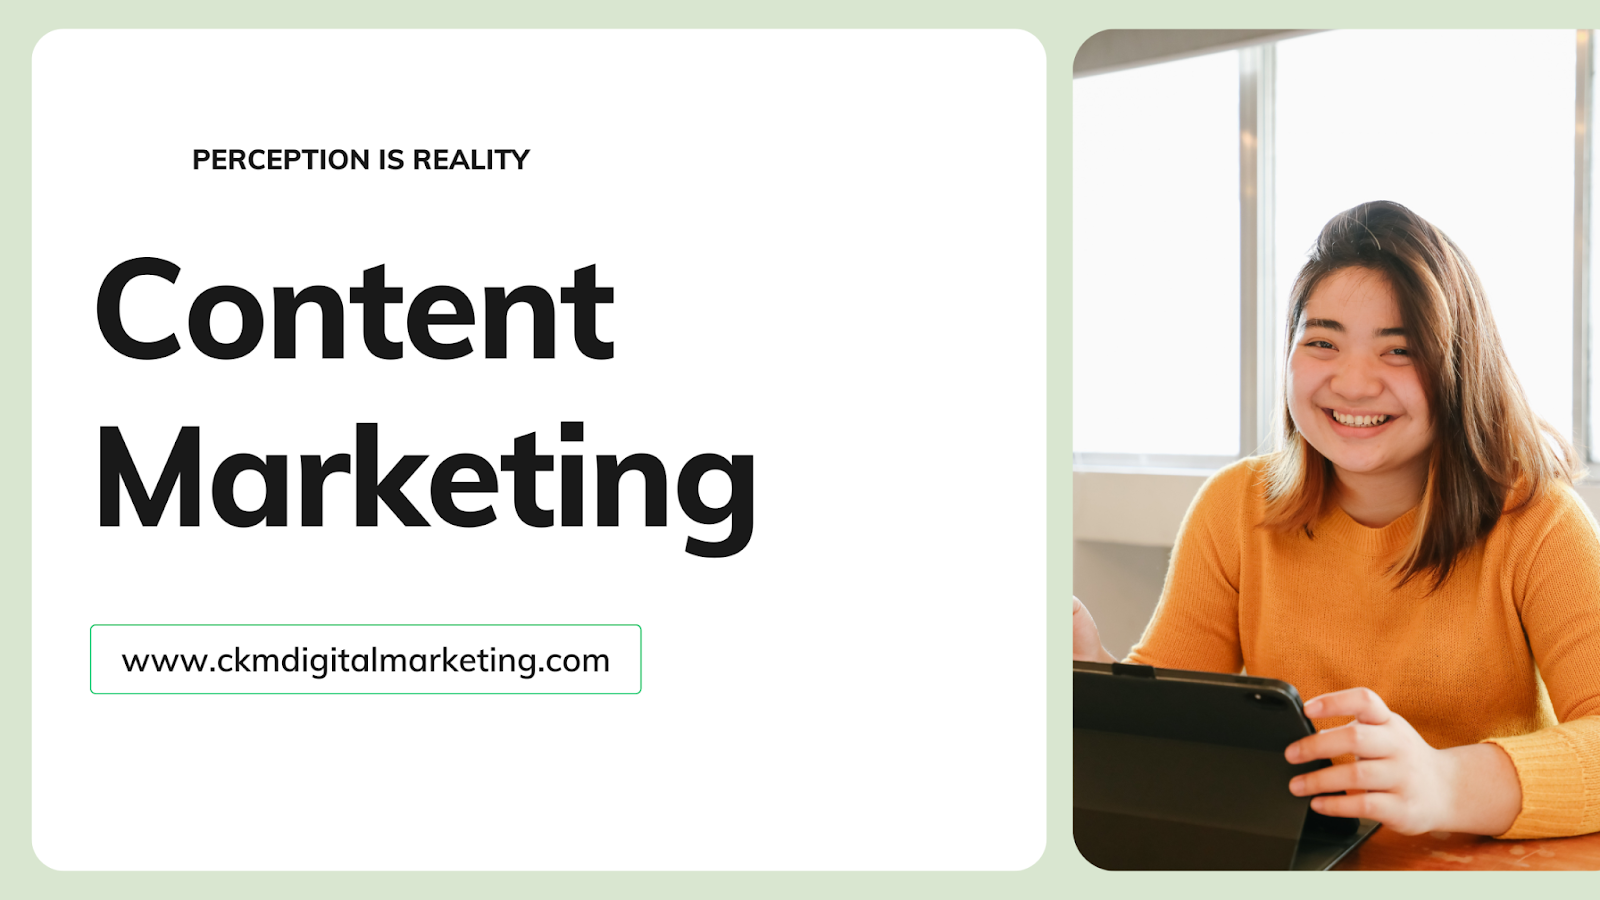 5 Amazing Benefits of Content Marketing